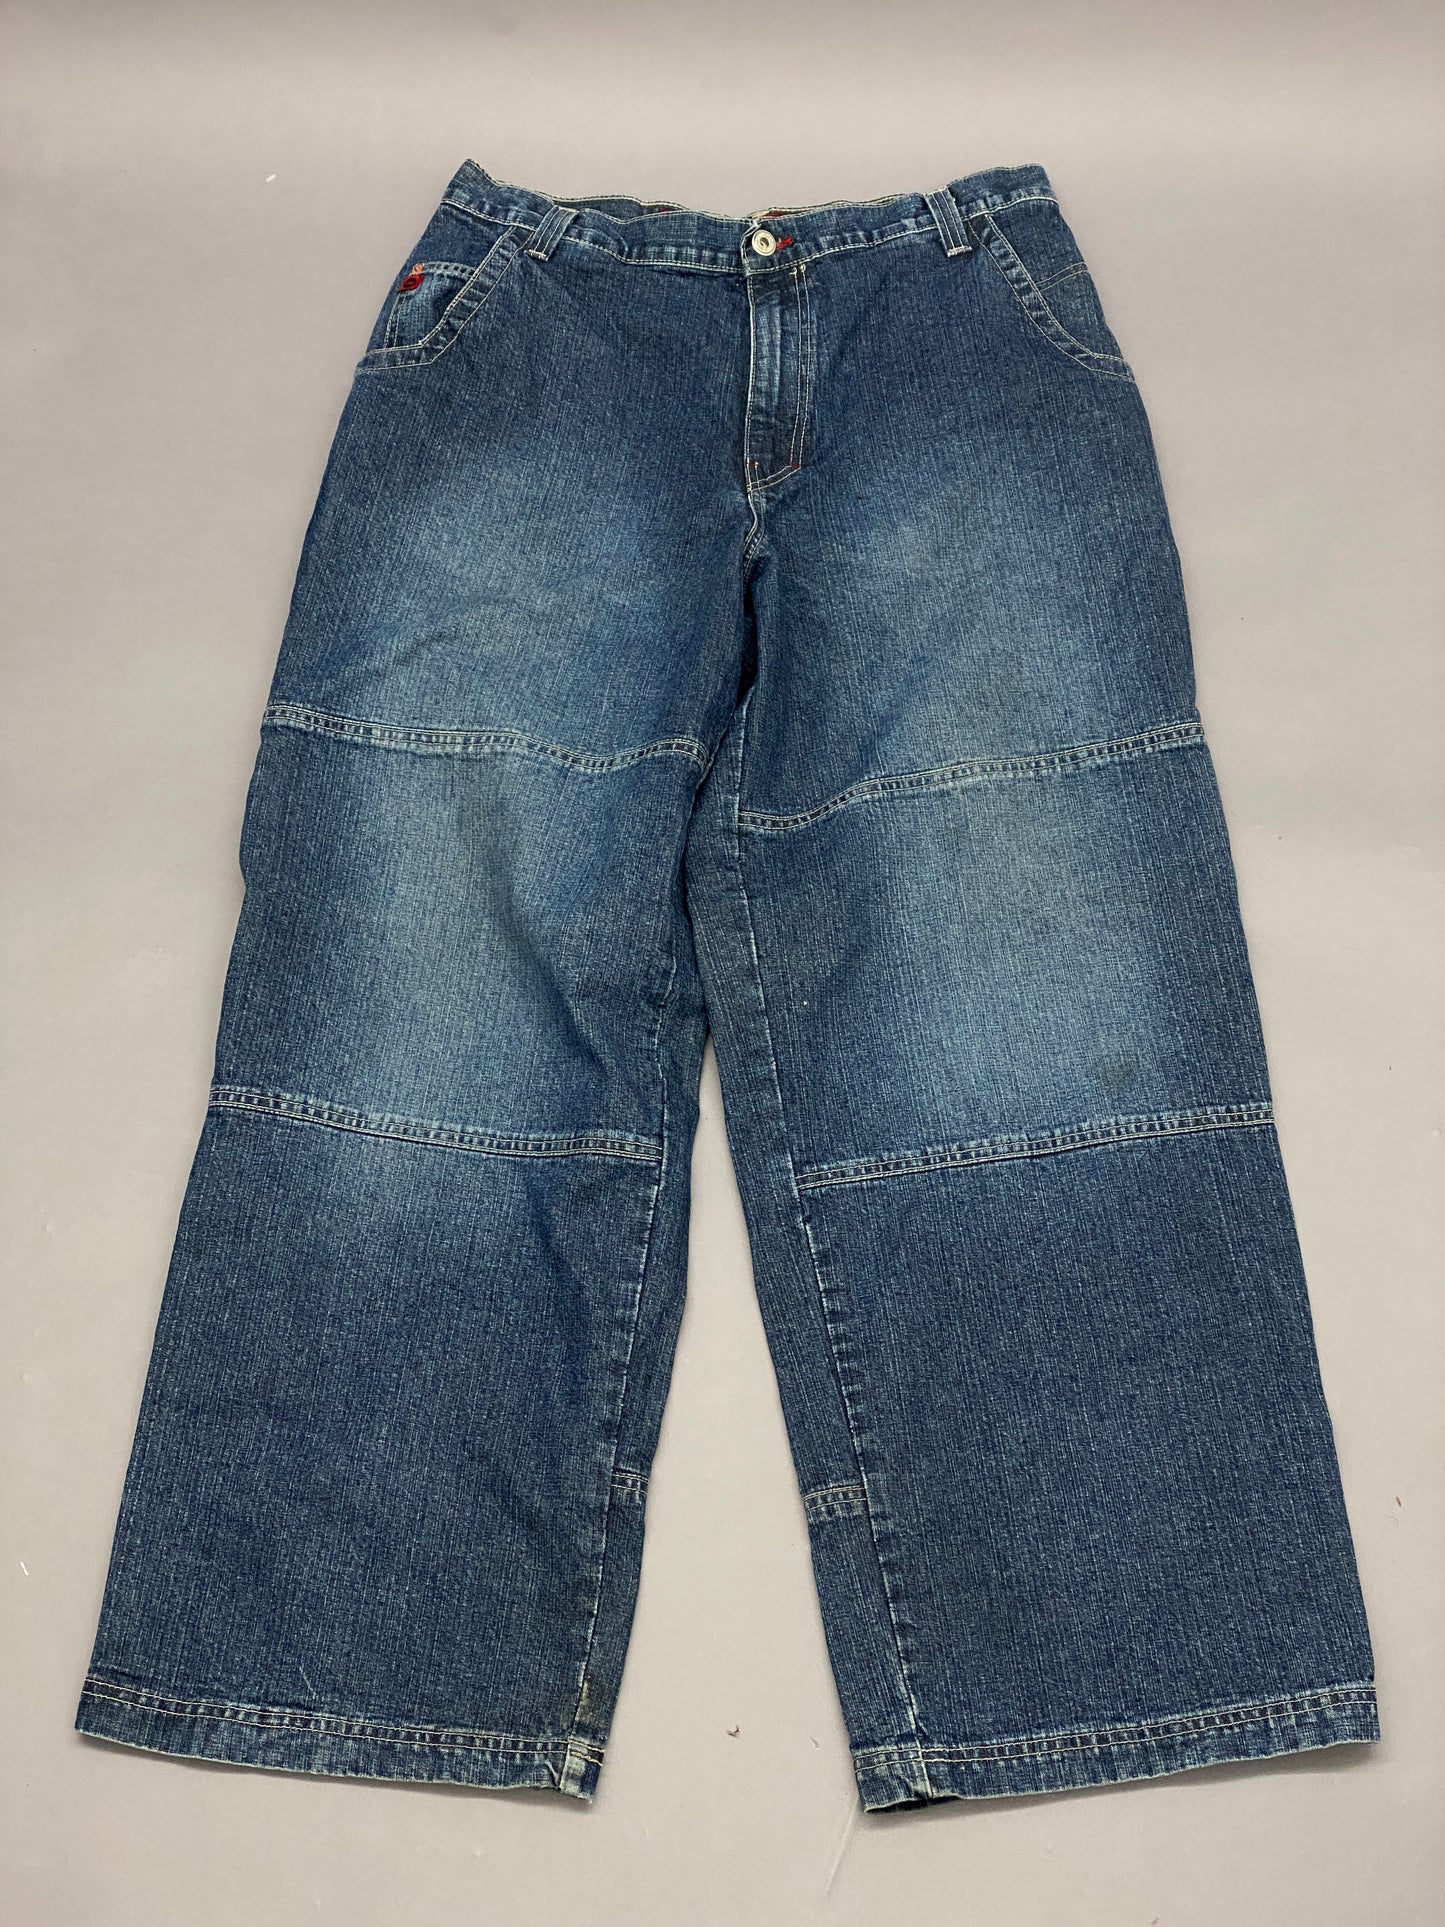 JNCO Carpenter Vintage Jeans - 36 x 32